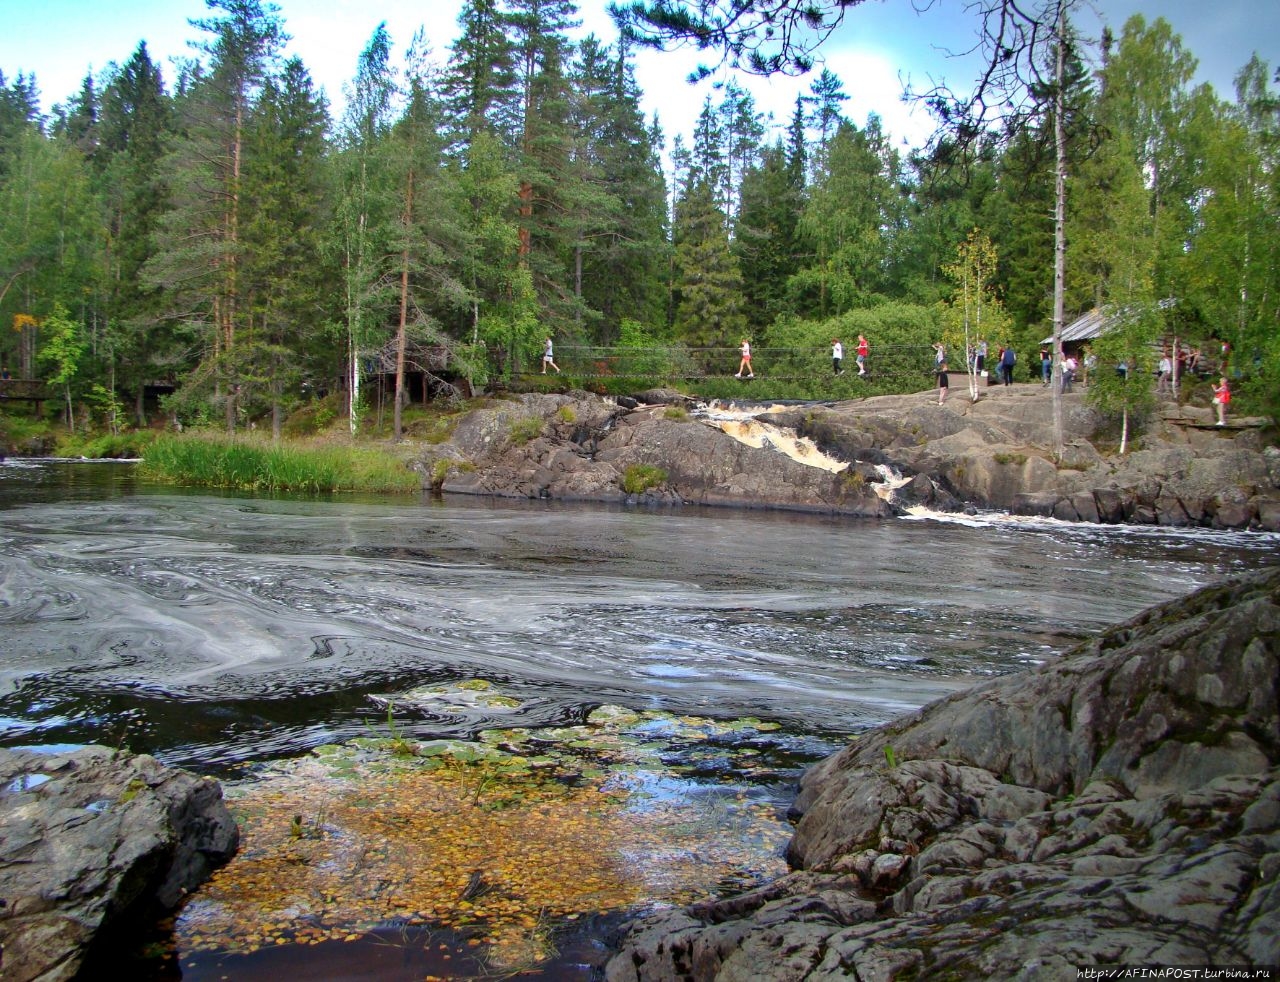 Водопад Ахинкоски Рускеала, Россия